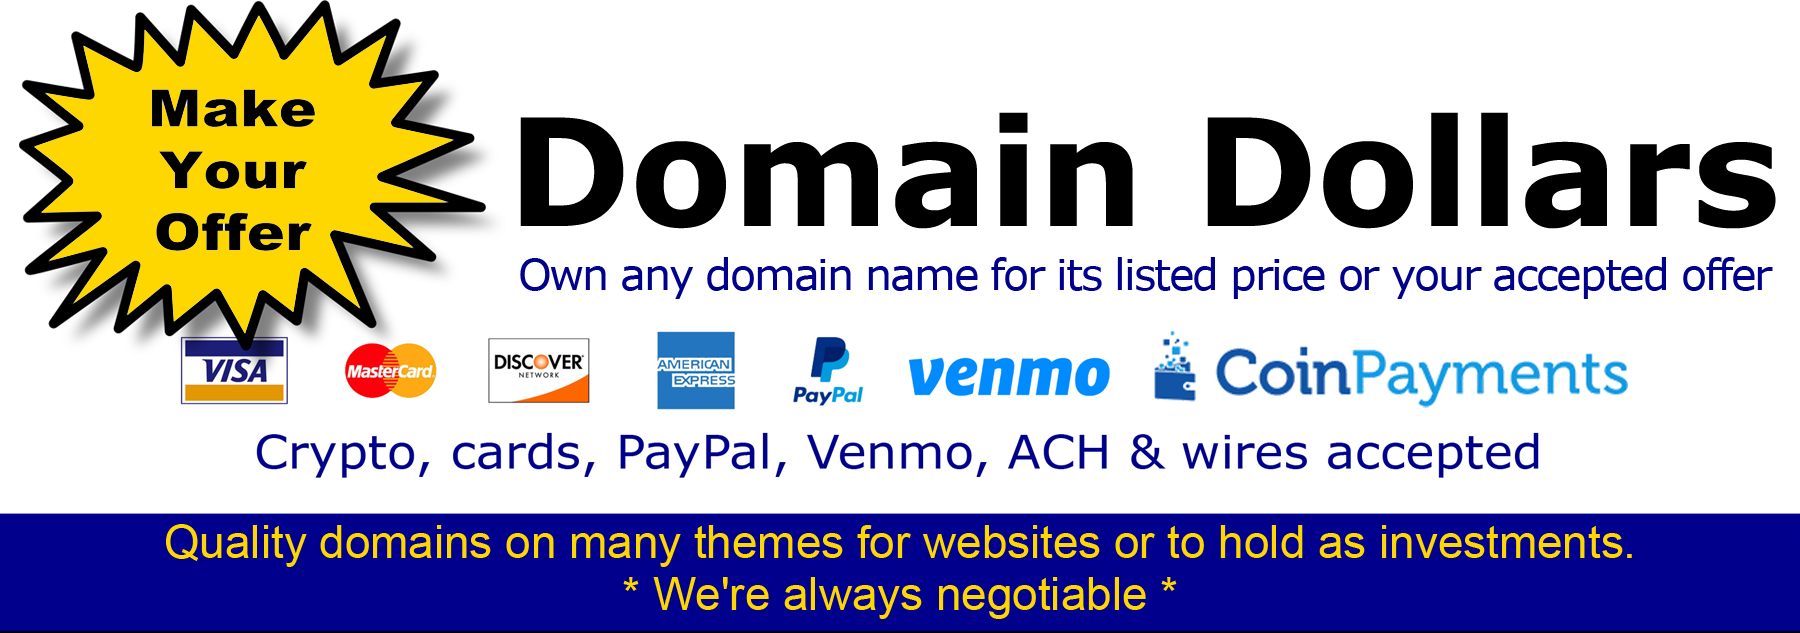 DomainDollars.com